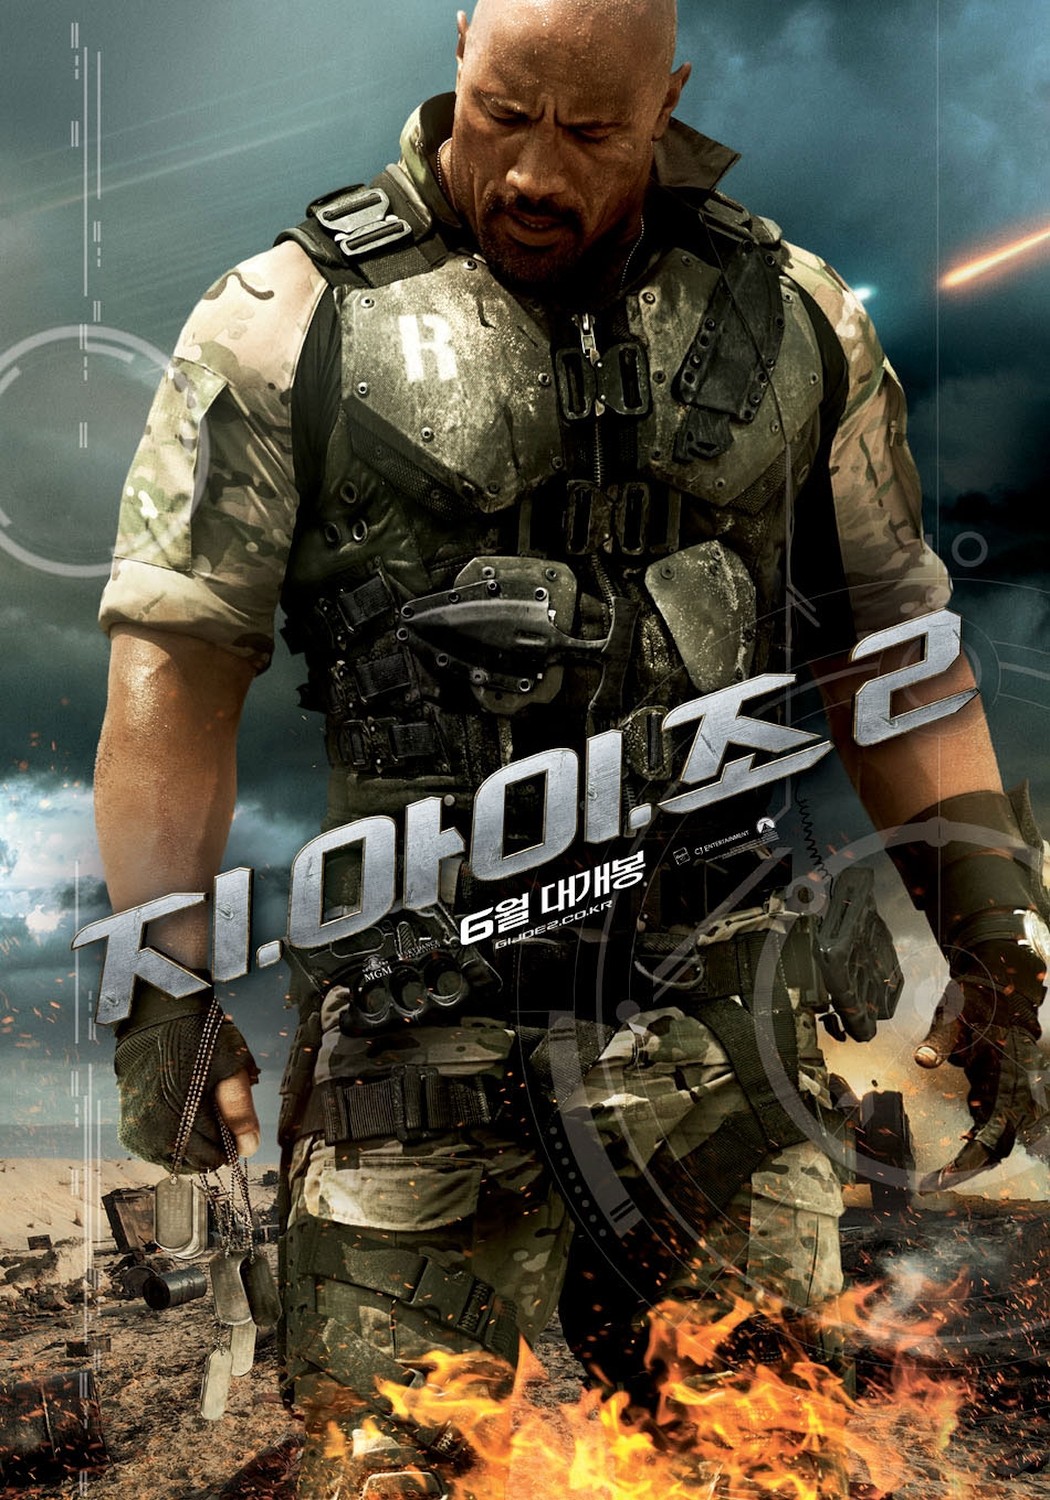 Extra Large Movie Poster Image for G.I. Joe: Retaliation (#15 of 32)